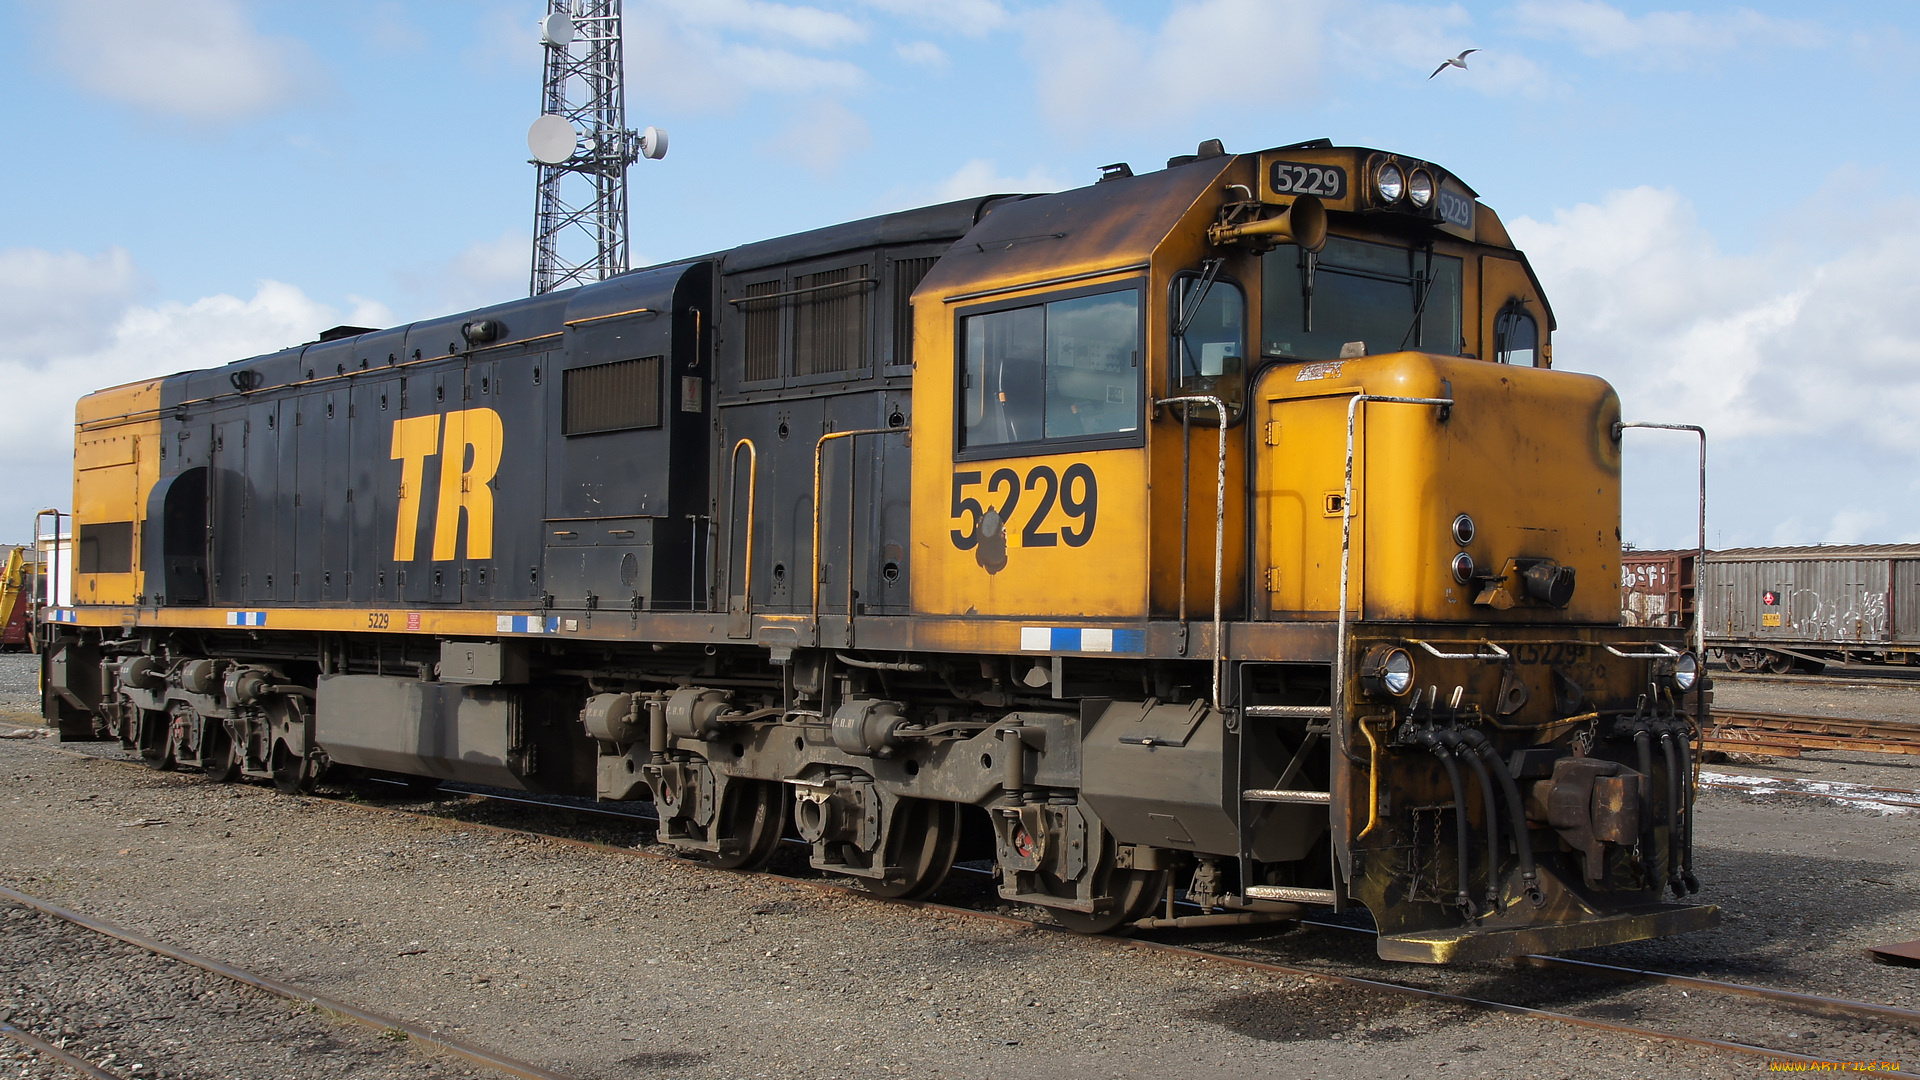 kiwirail, dxc, 5229, locomotive, техника, локомотивы, рельсы, дорога, железная, локомотив